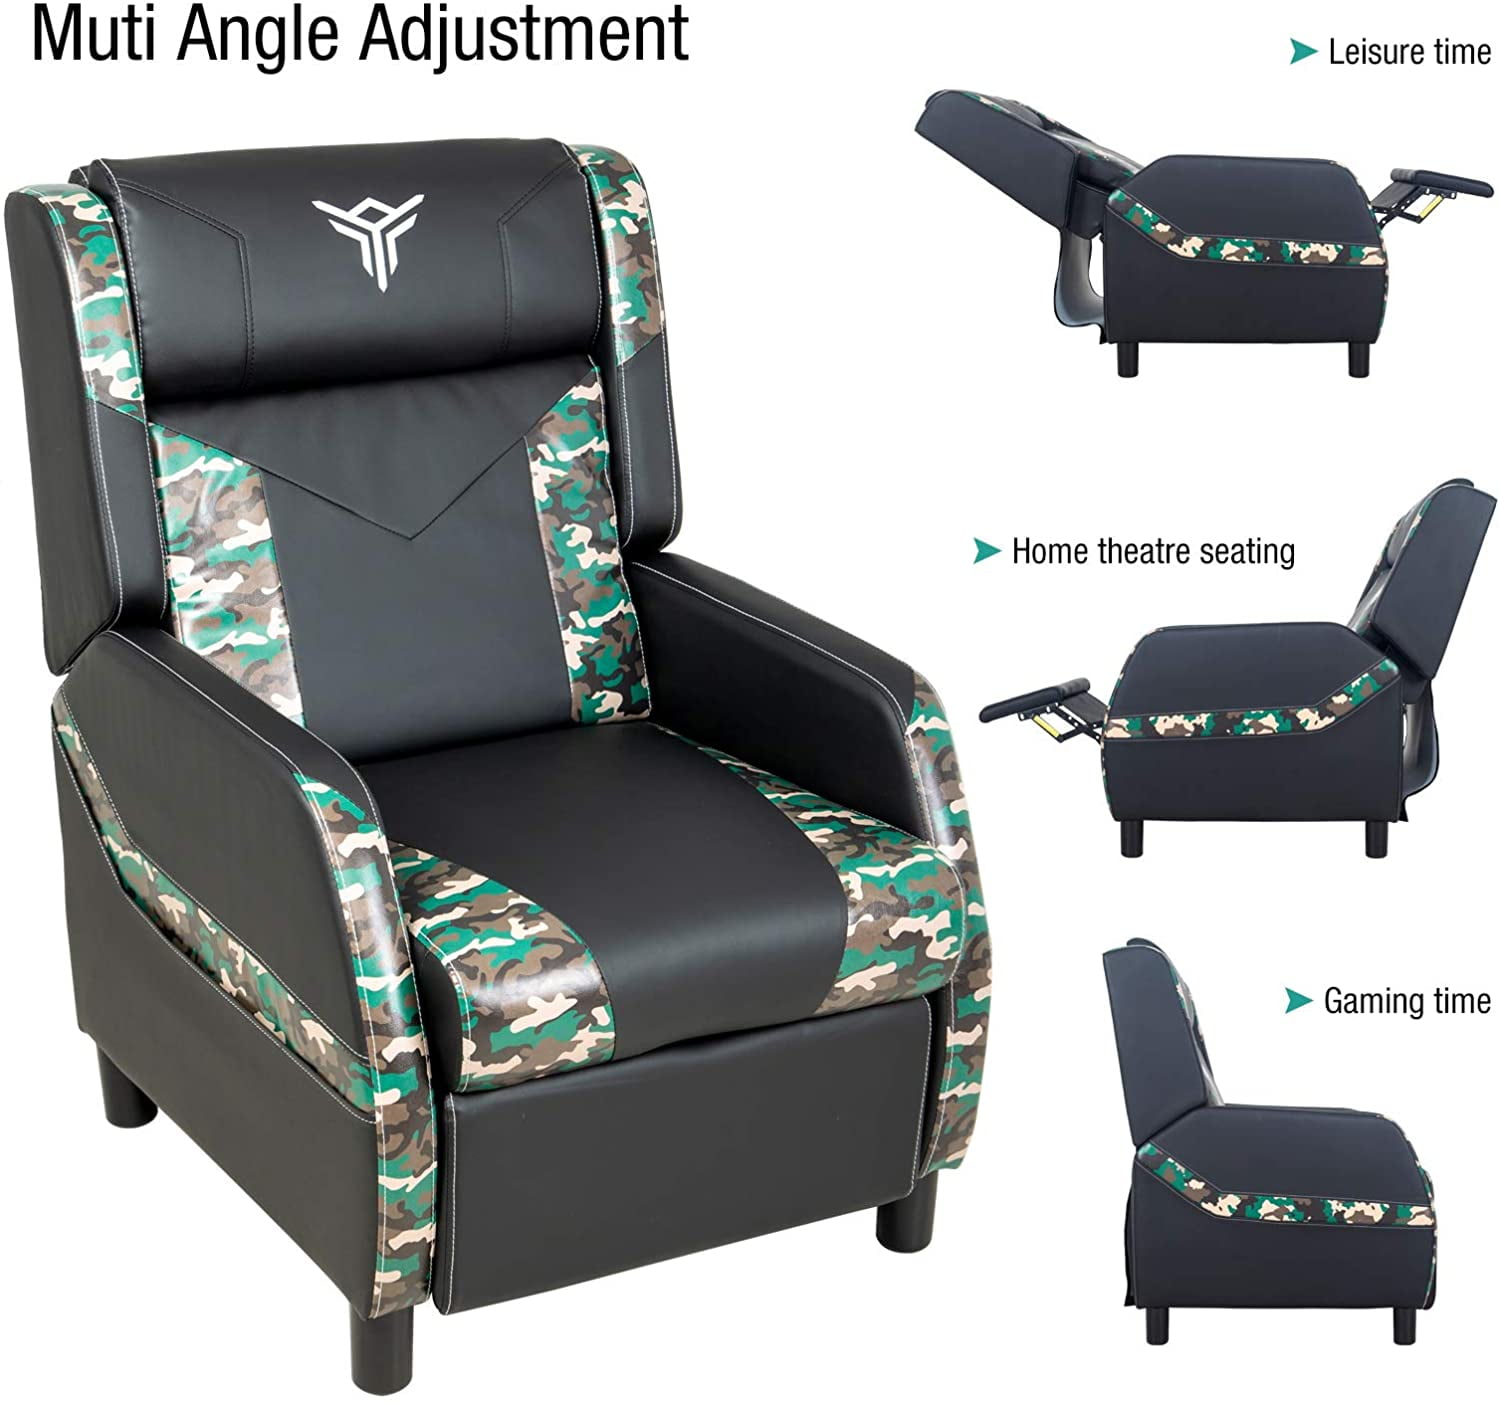 Ergonomic Racing Gaming Chair Overstuffed Swivel Recliner with Massage Cushion 